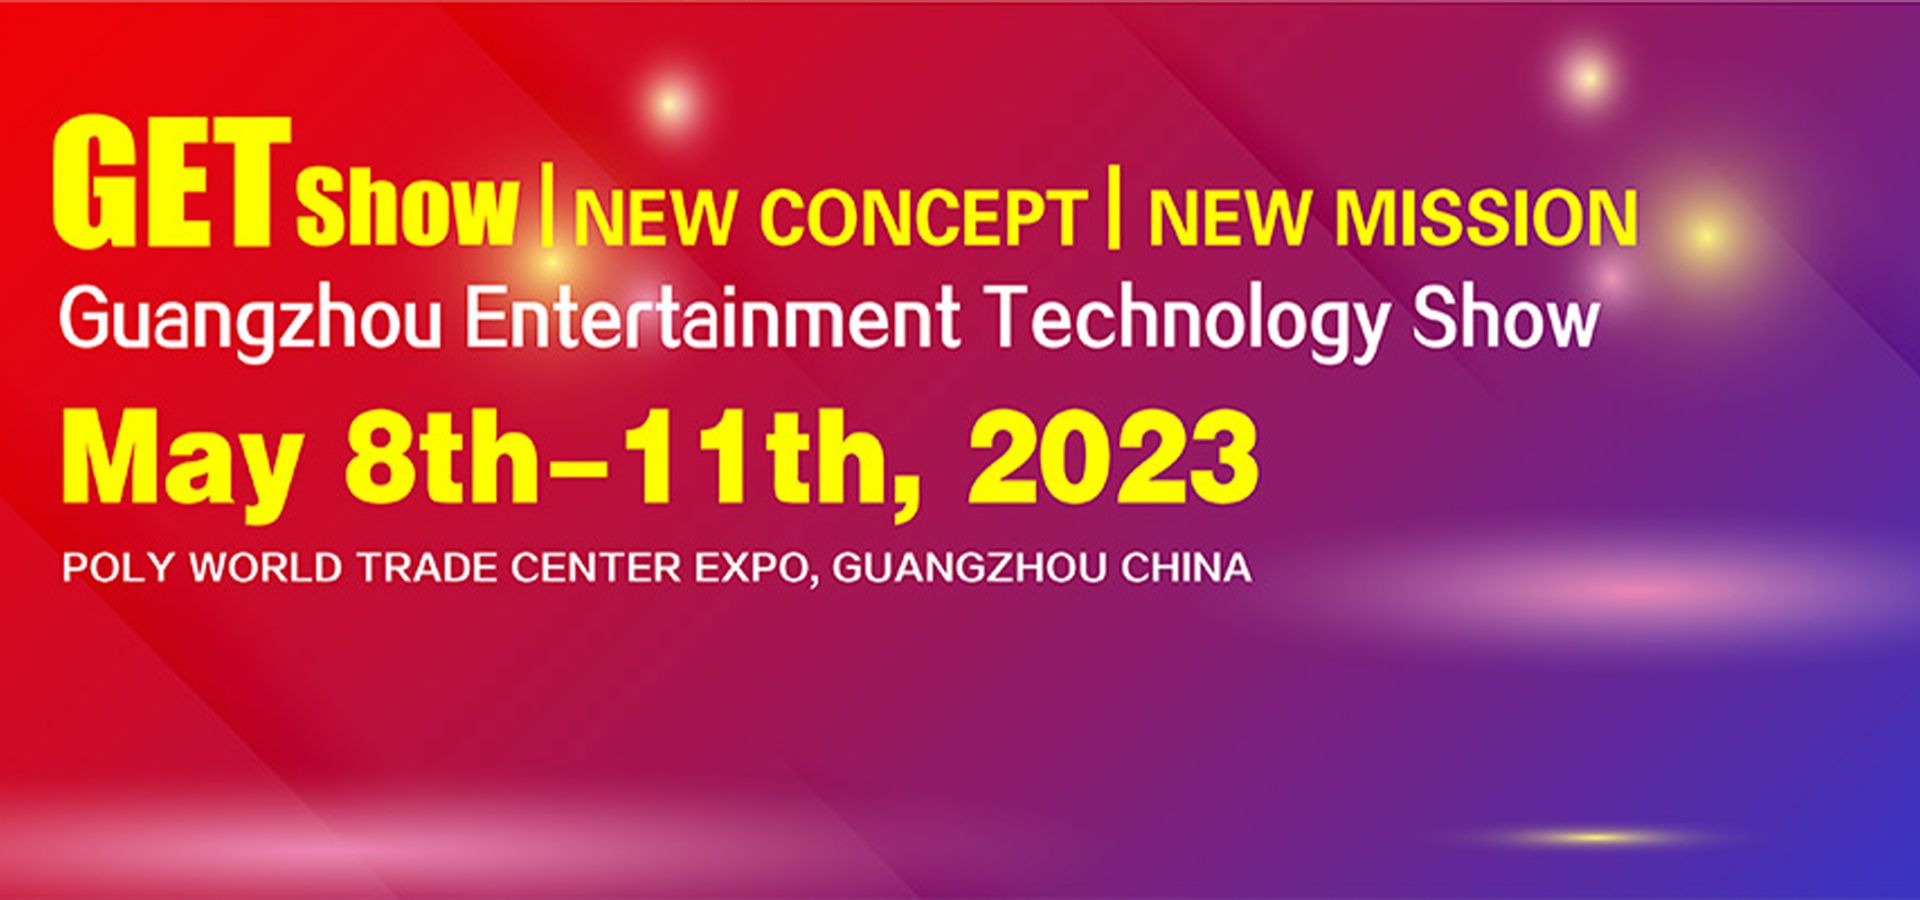 GET show (GUANGZHOU ENTERTAINMENT TECHNOLOGY SHOW) 2023.